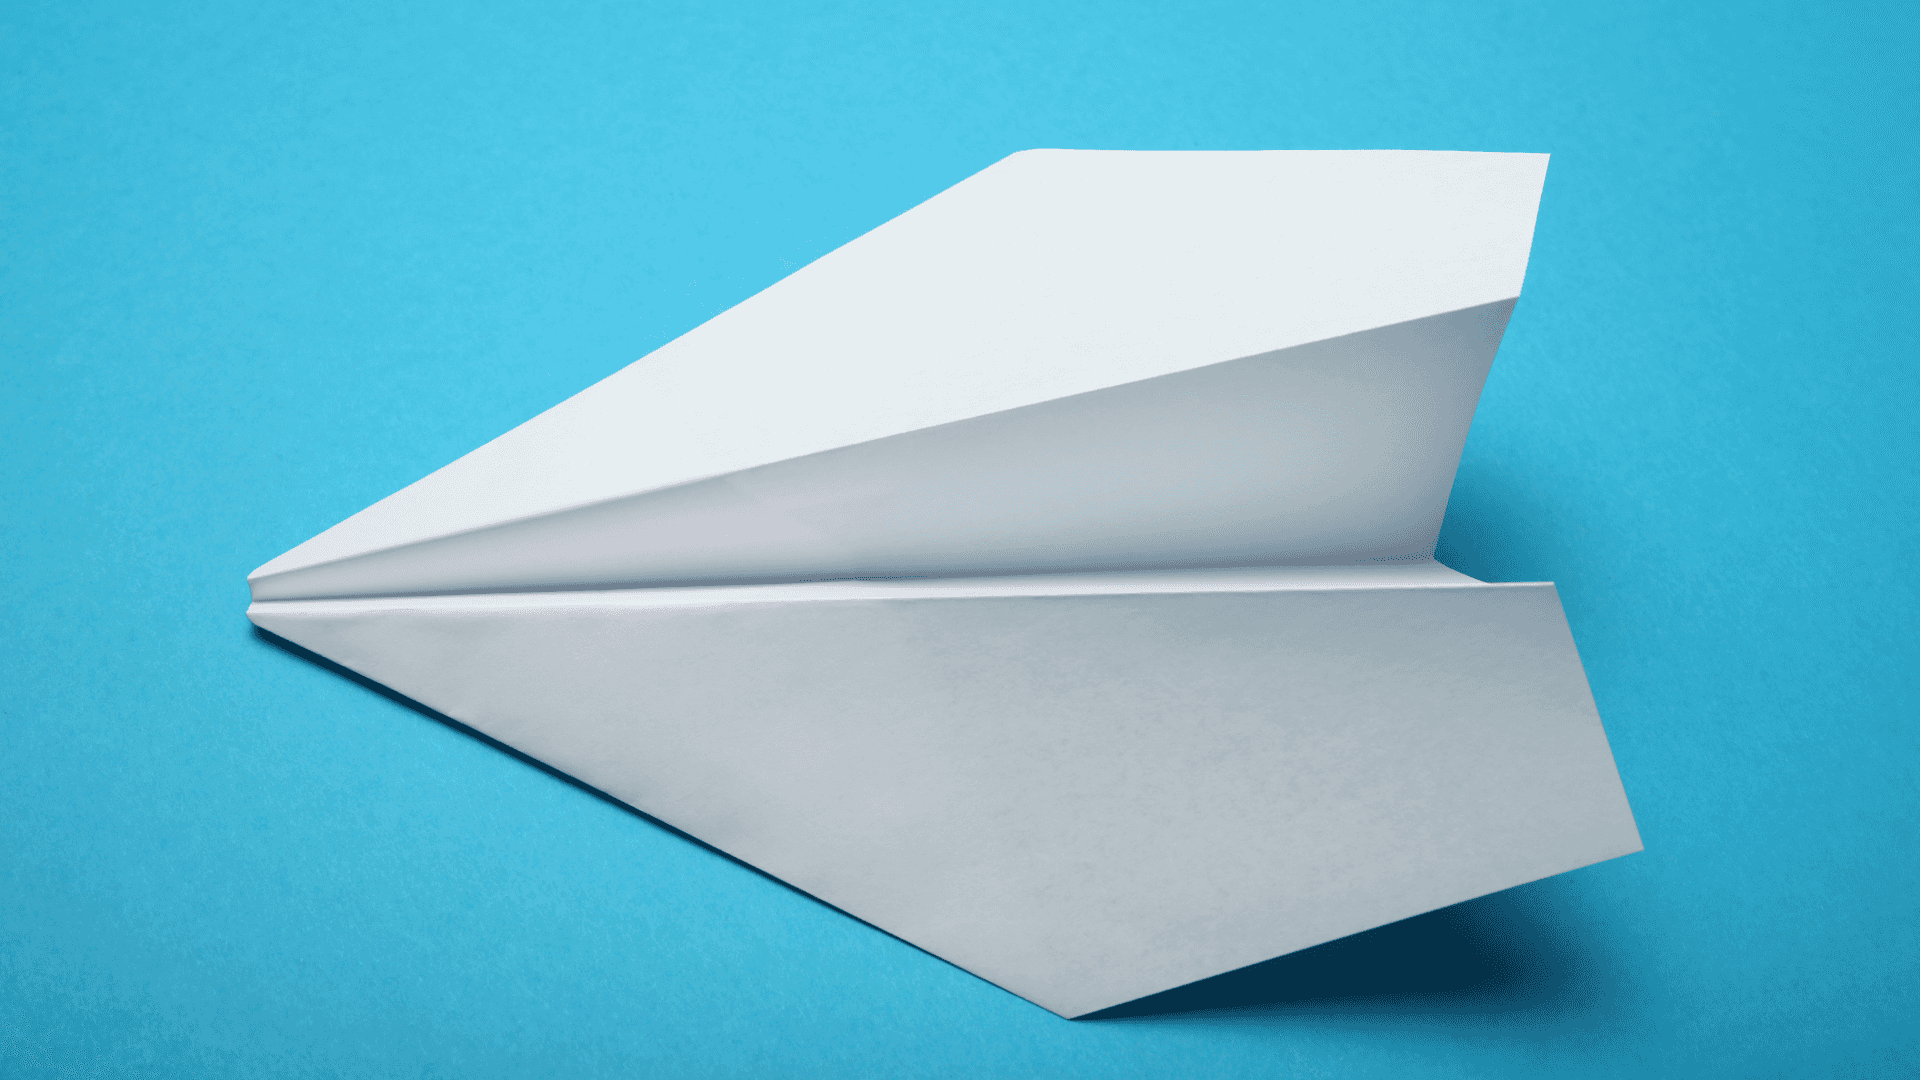 Ettvitt Pappersflygplan På En Blå Bakgrund